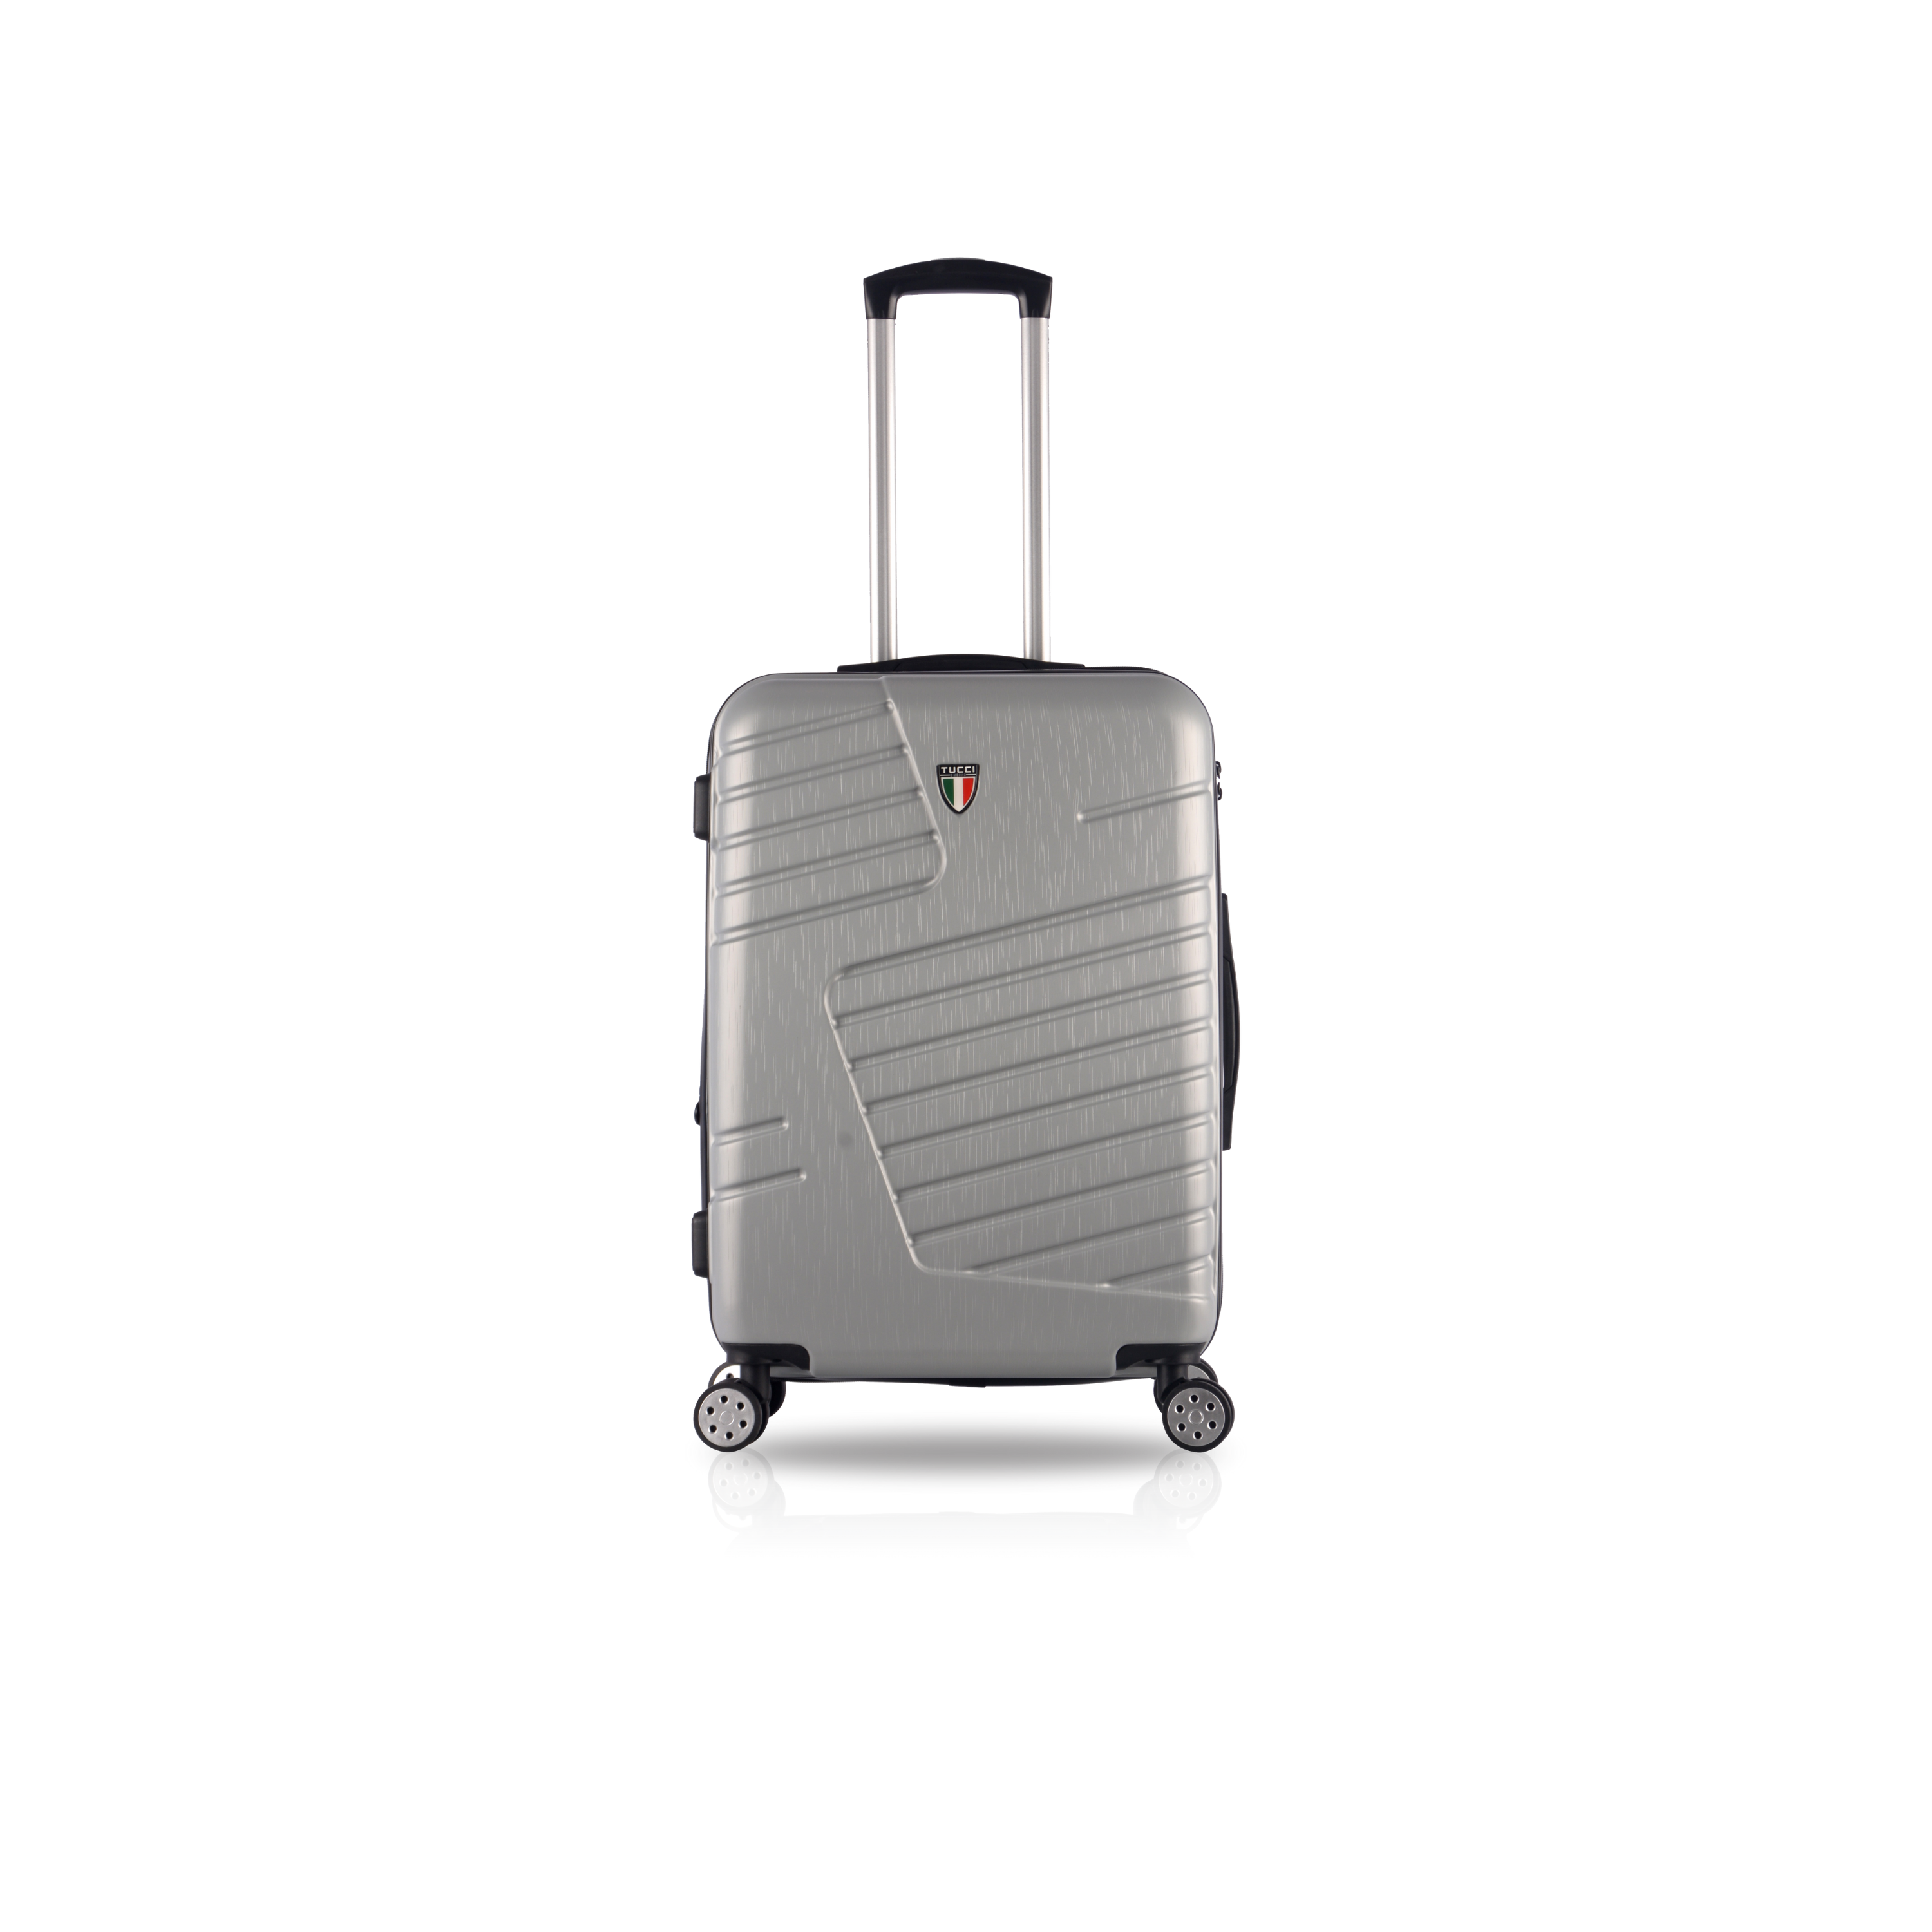 TUCCI BOSCHETTI ABS 3 PC (20", 24", 28") Luggage Set